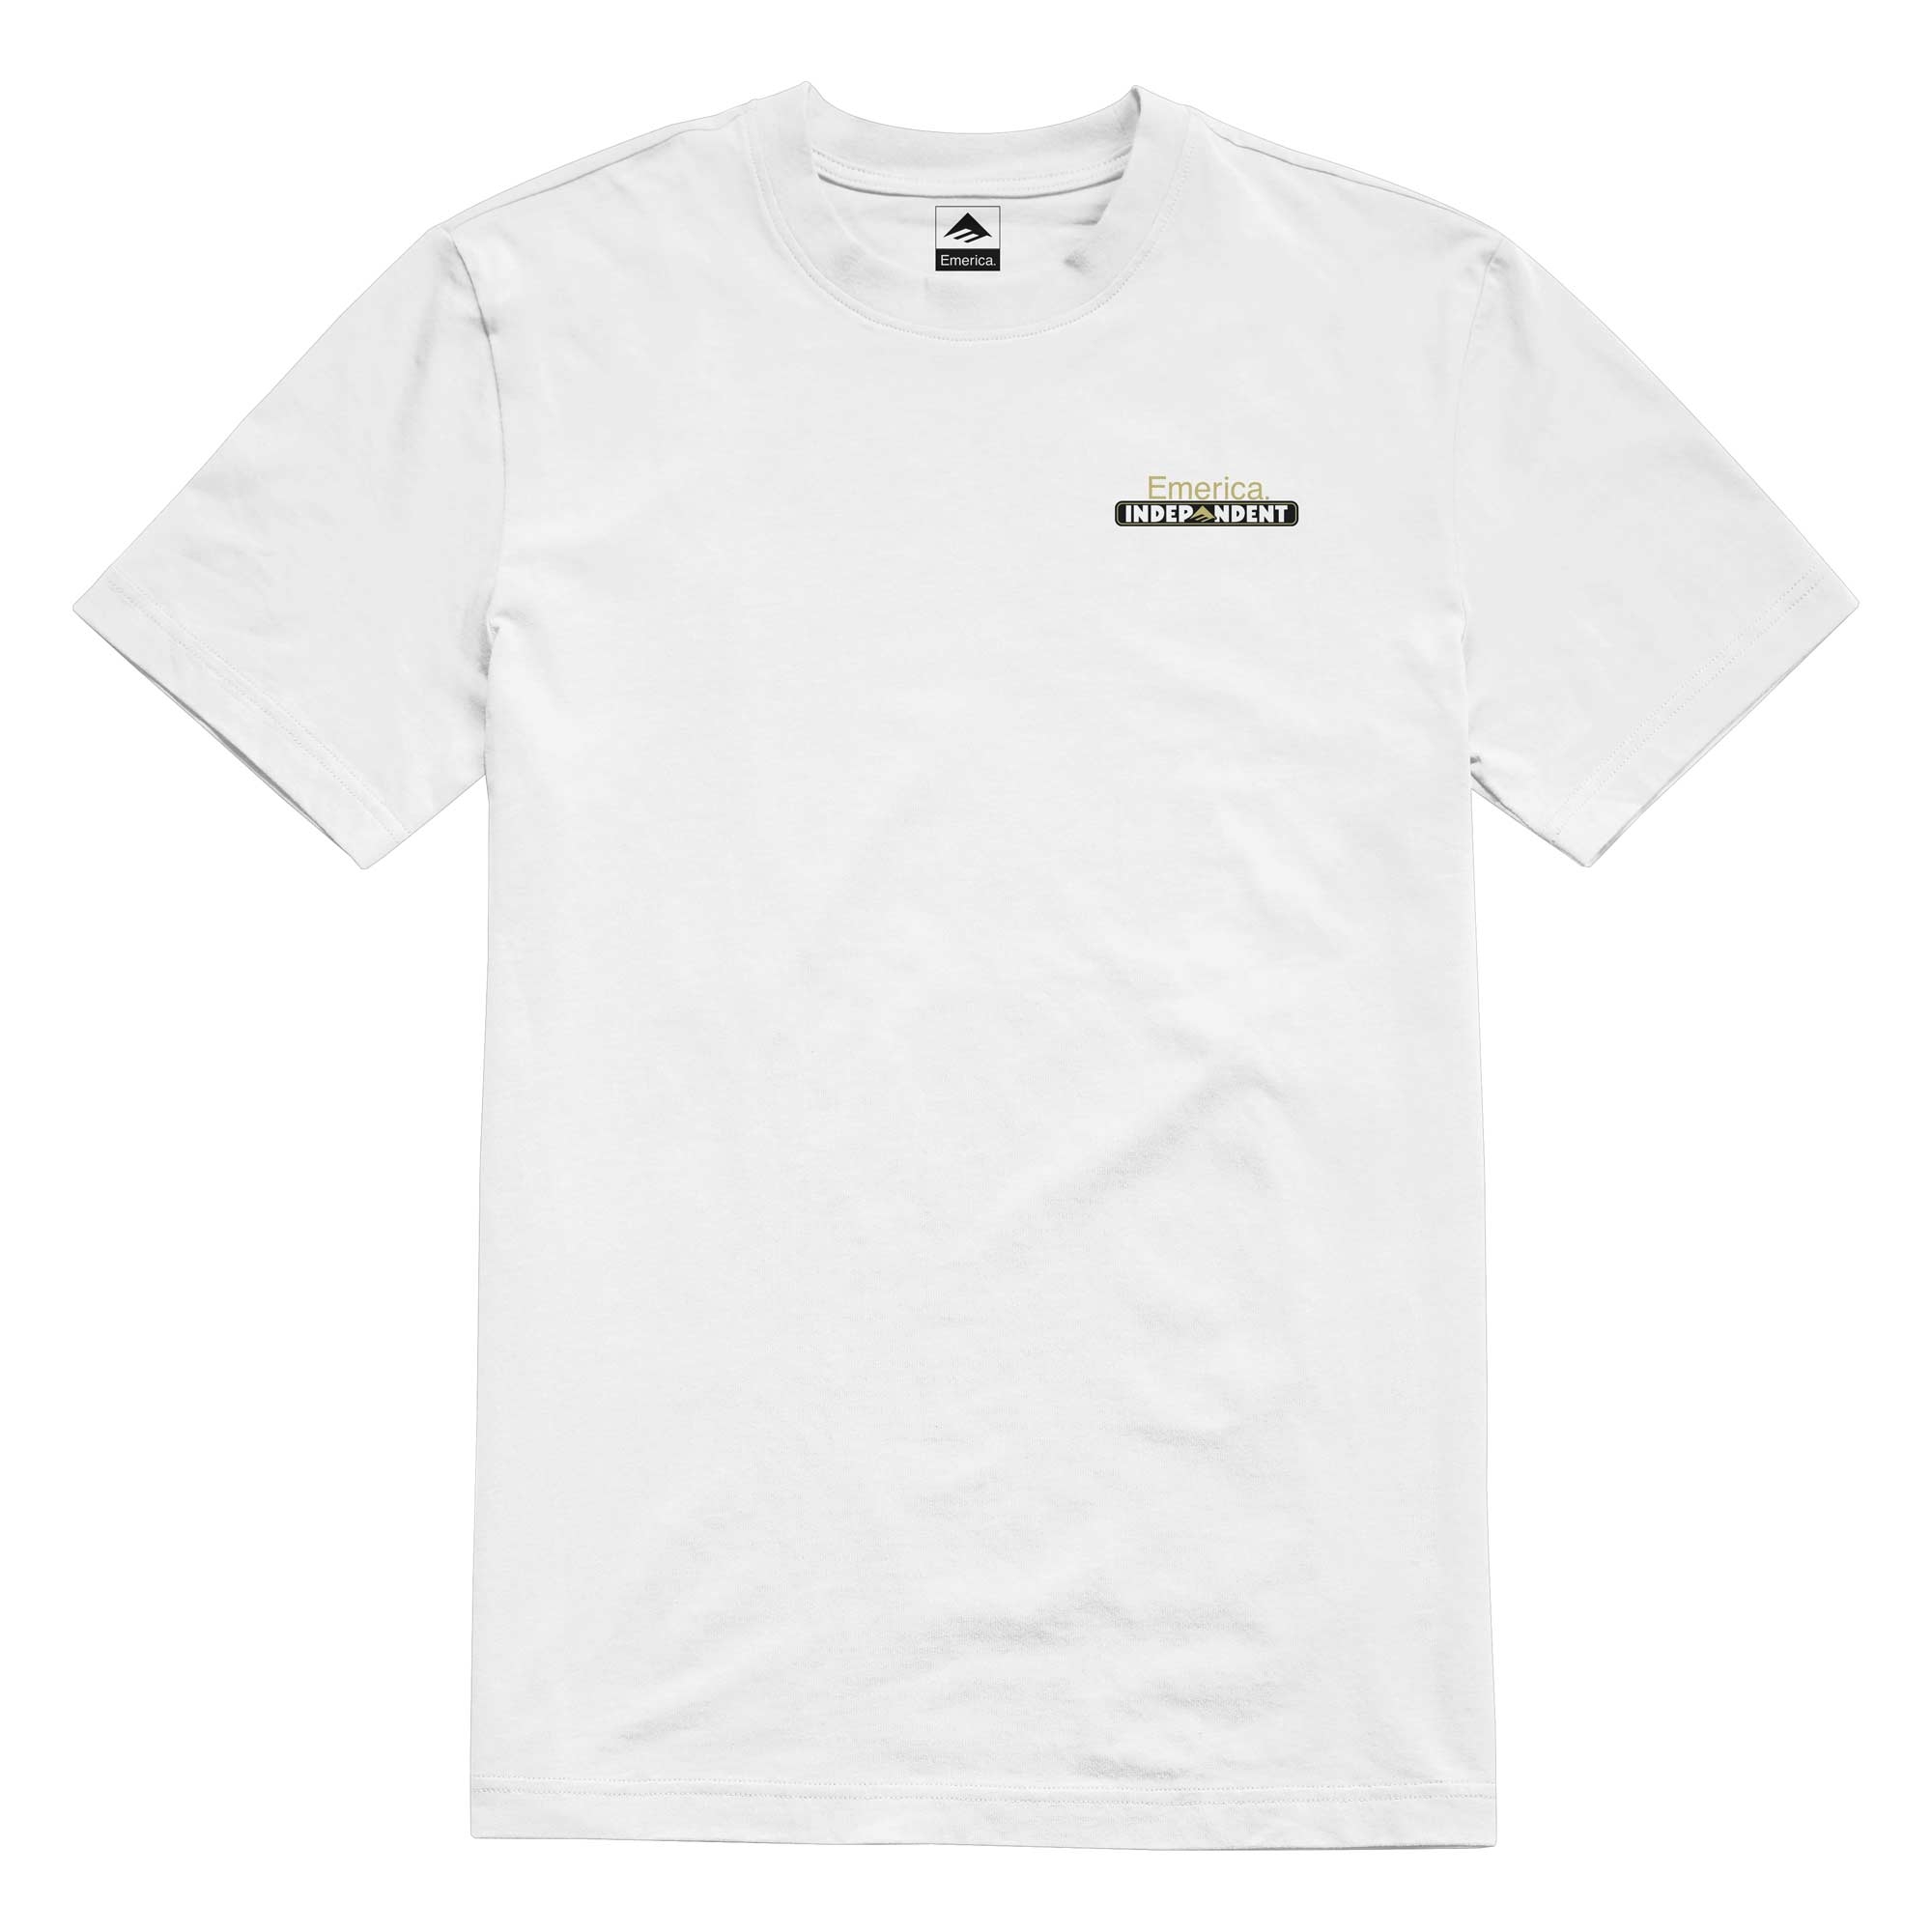 EMERICA T-Shirt EMERICA X INDY BAR white